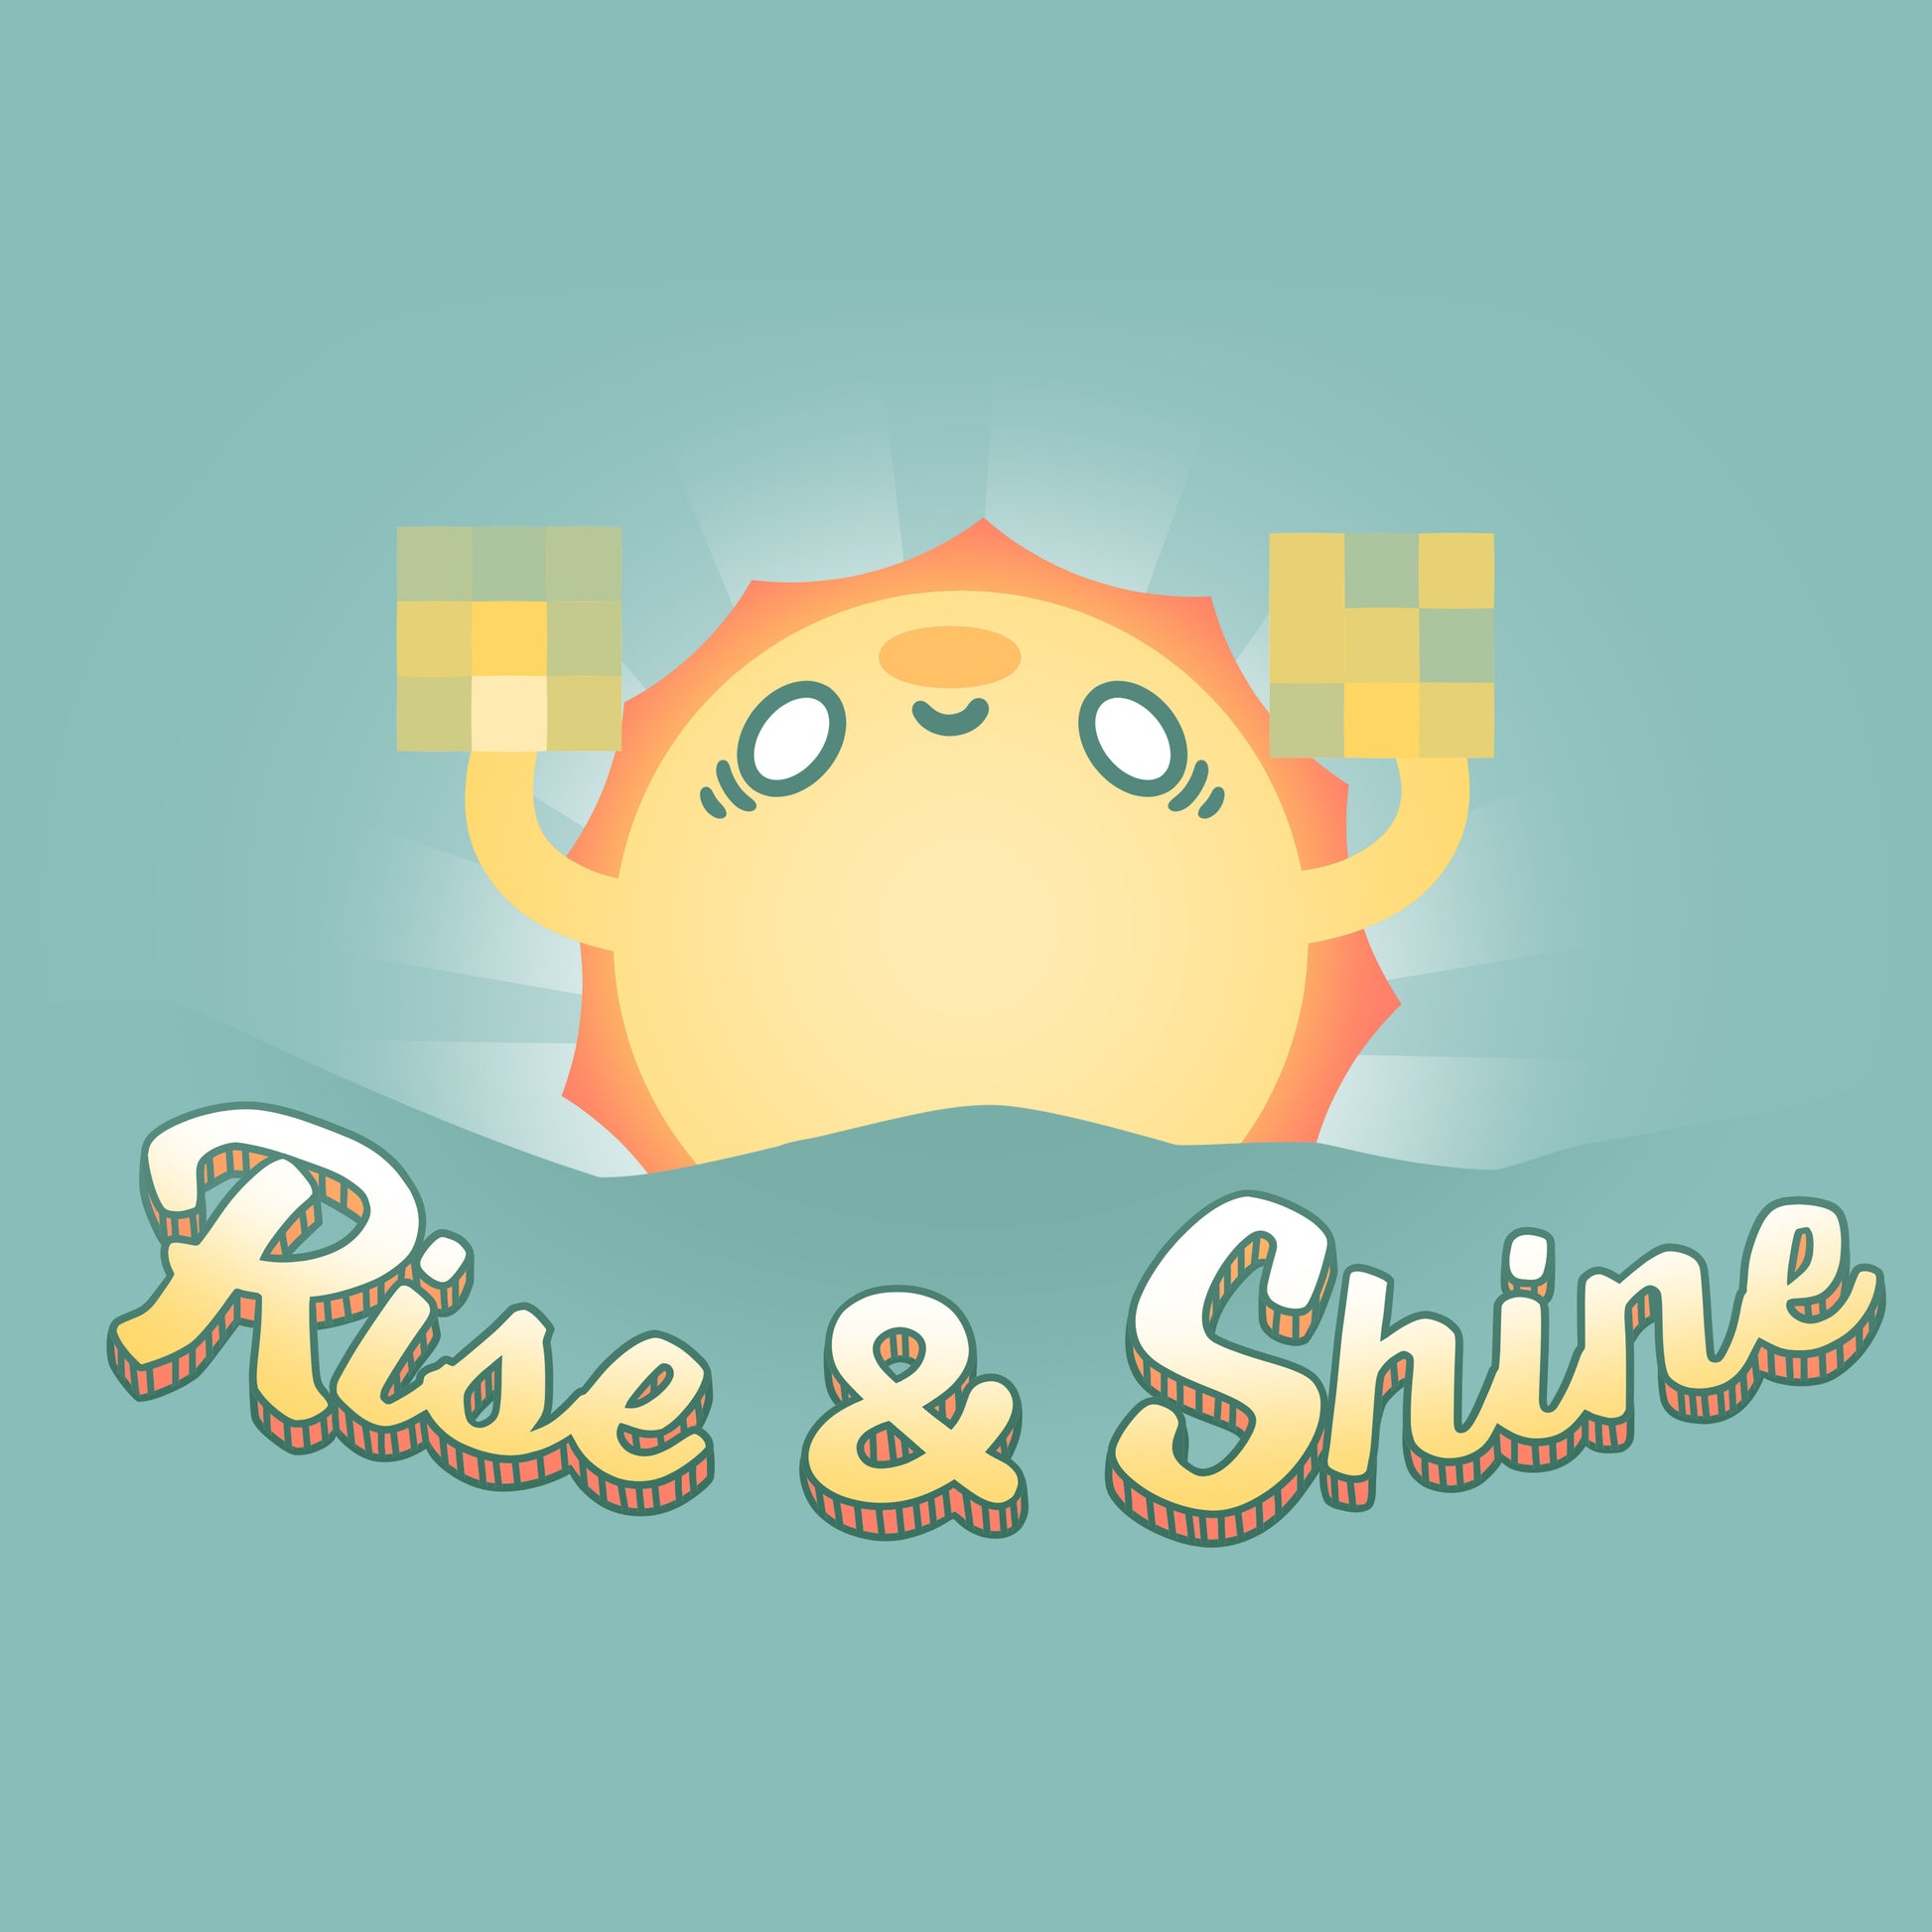 Men's TeeTurtle T-shirt with a "Rise & Shine" logo.